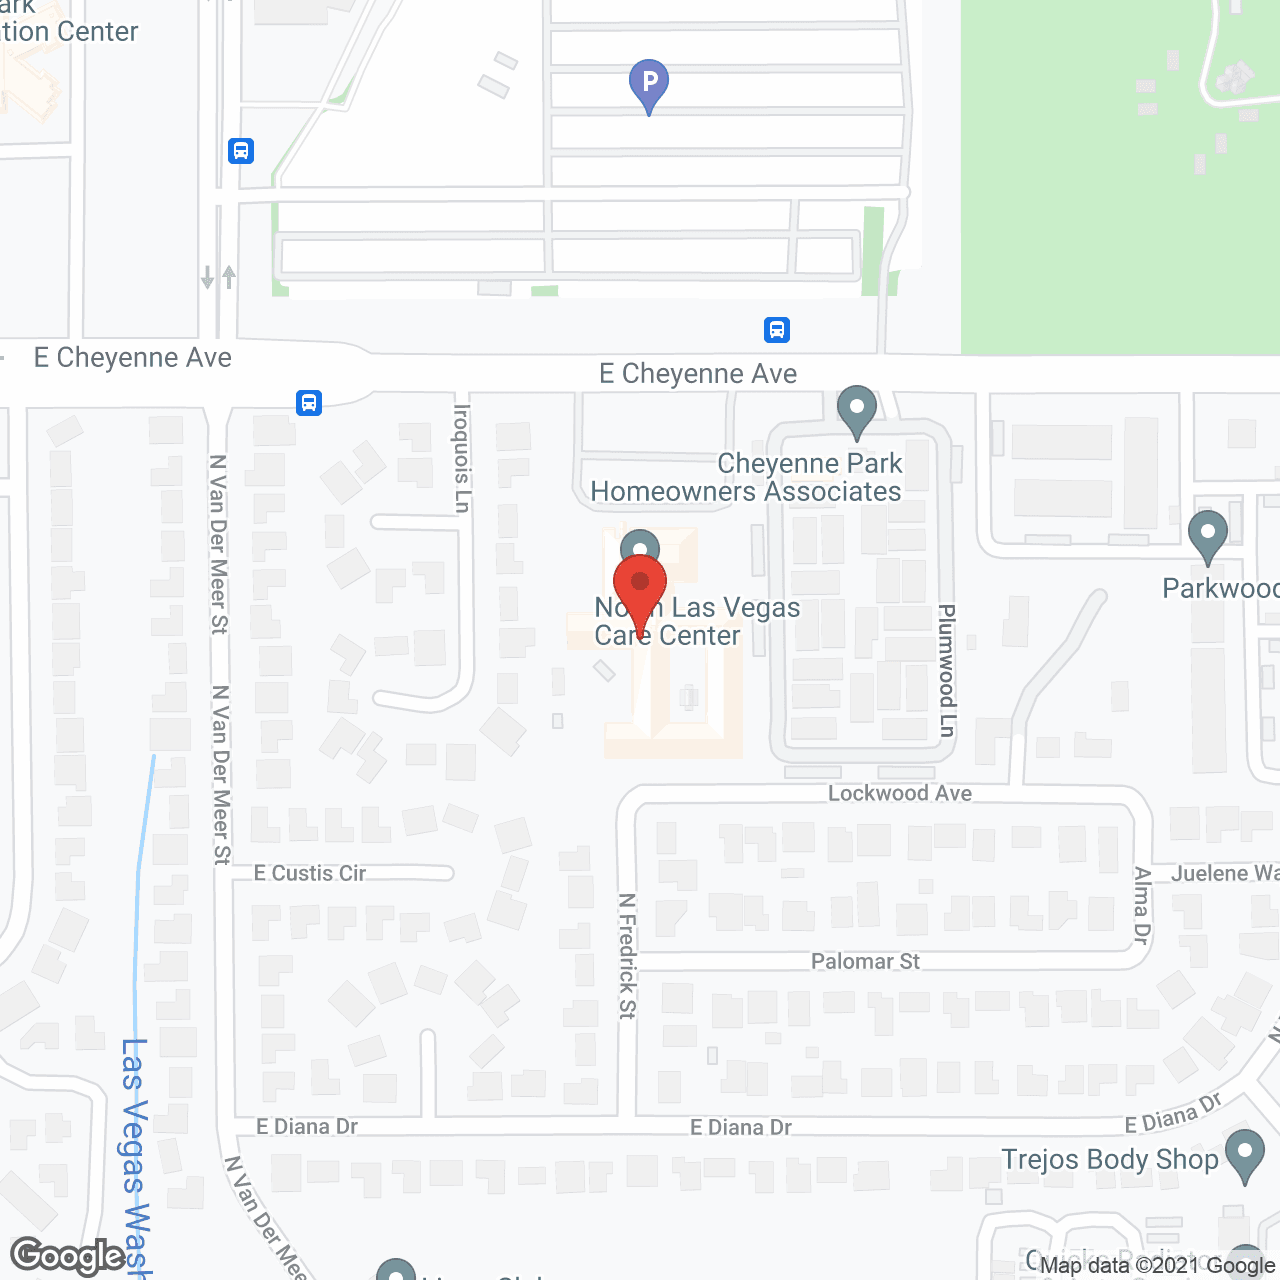 North Las Vegas Care Center in google map